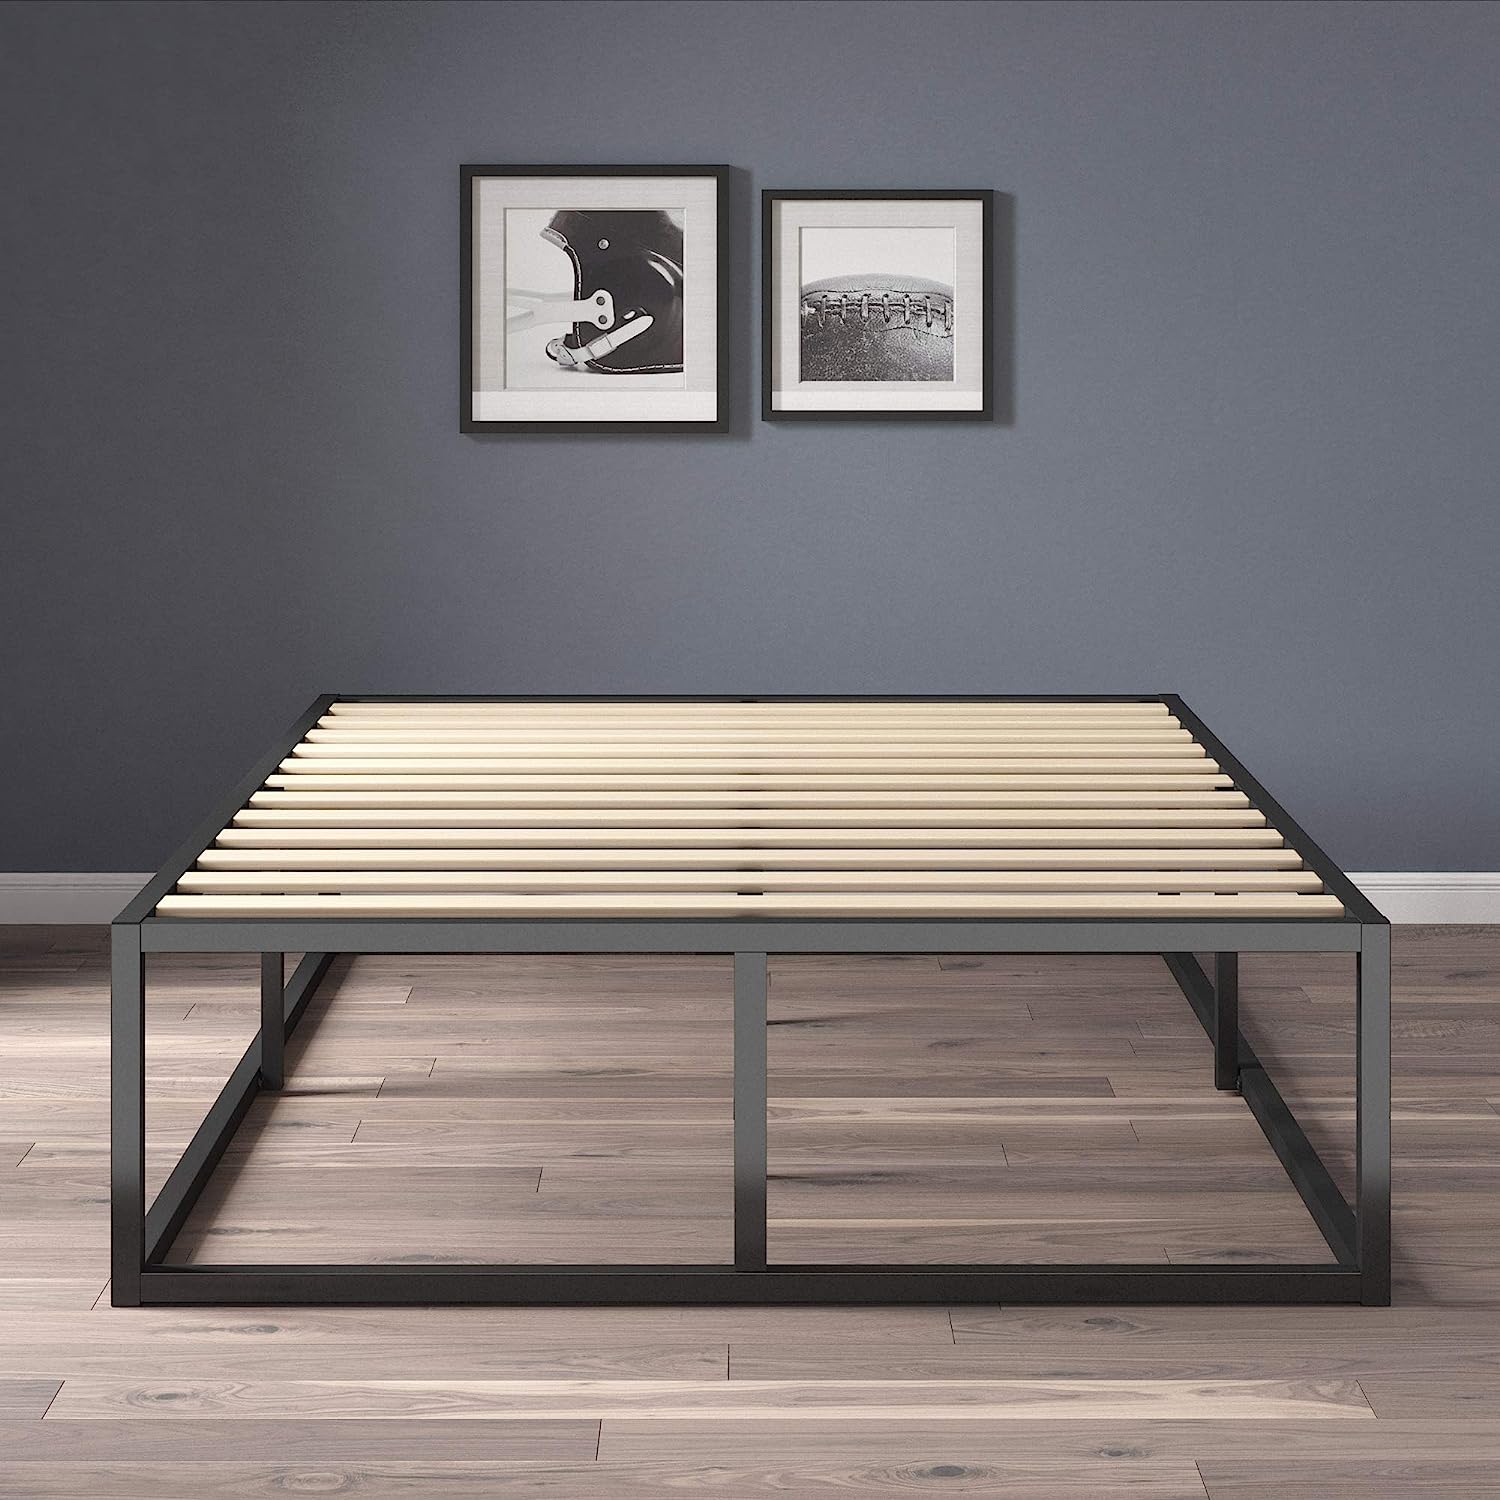 ZINUS Joseph Metal Platforma Bed Frame, Twin - $65